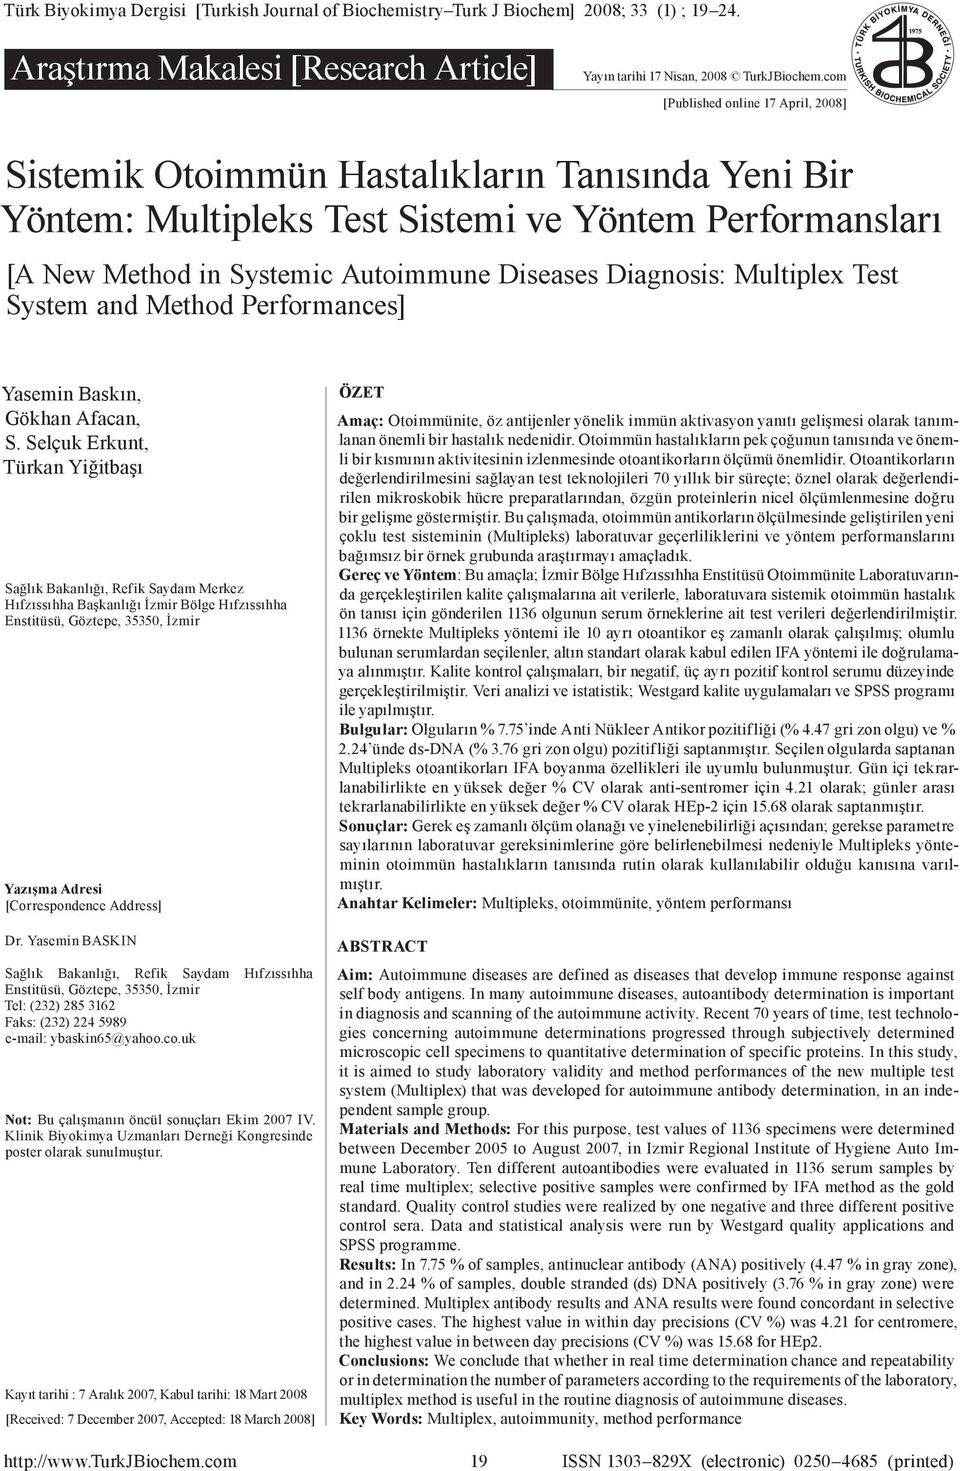 Diagnosis: Multiplex Test System and Method Performances] Yasemin Baskın, Gökhan Afacan, S.